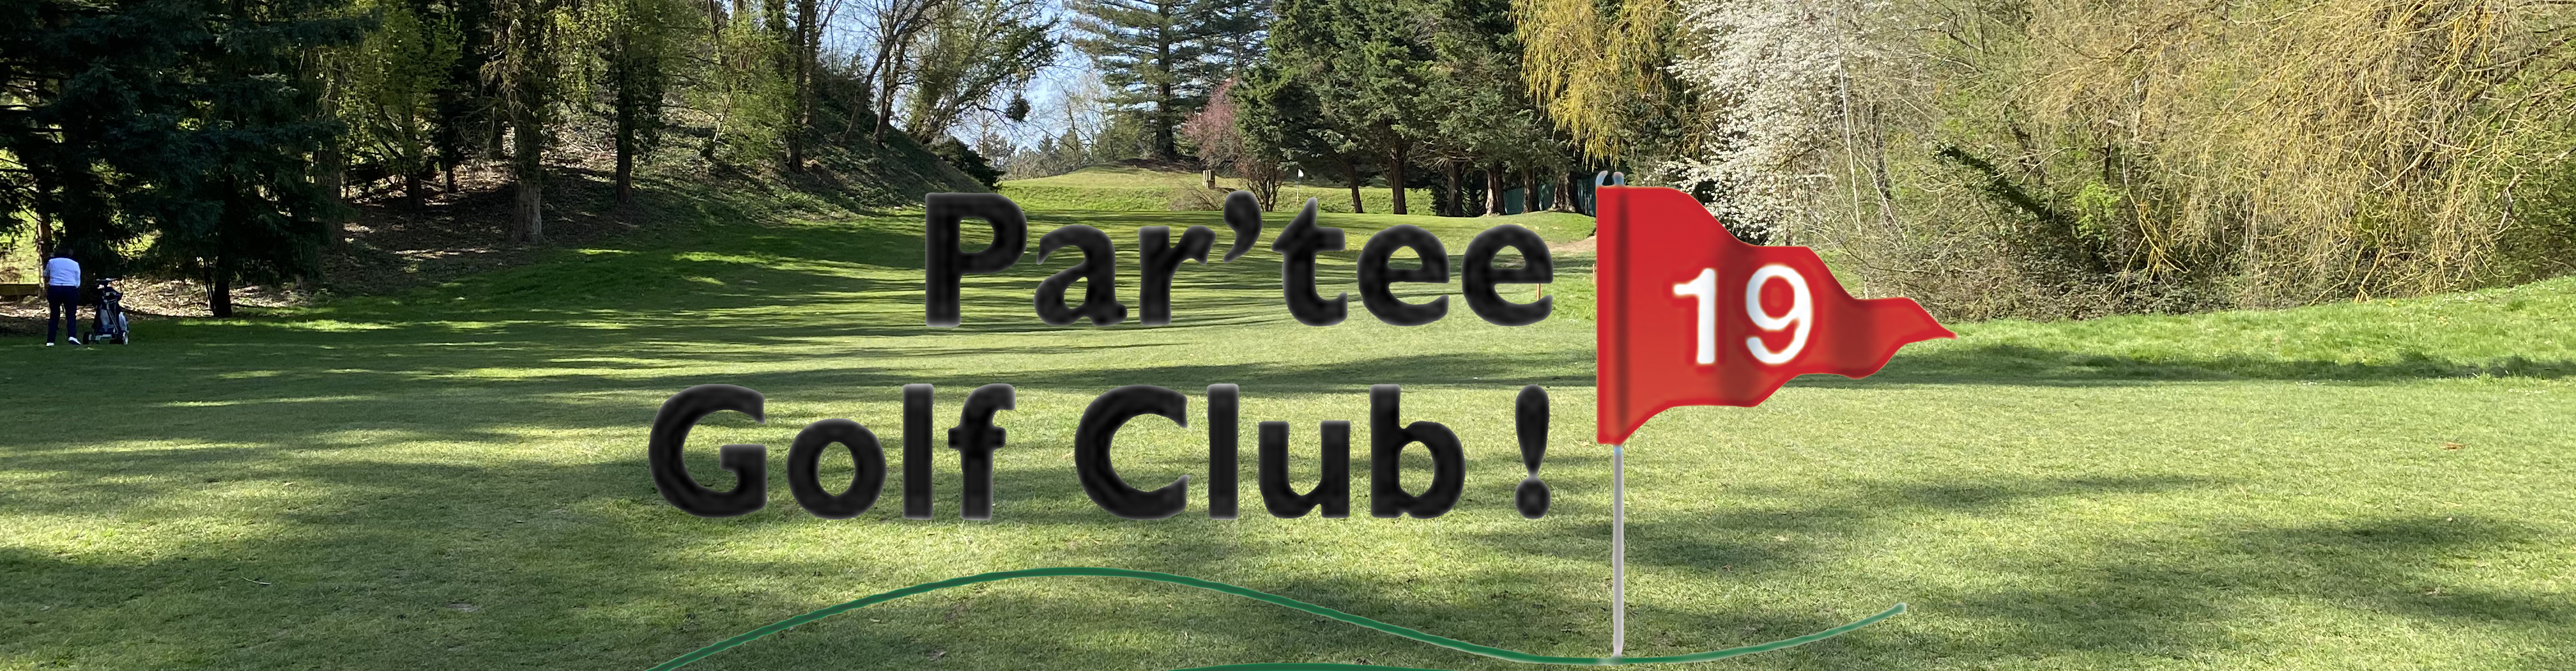 L'association golfique Par'tee Golf Club